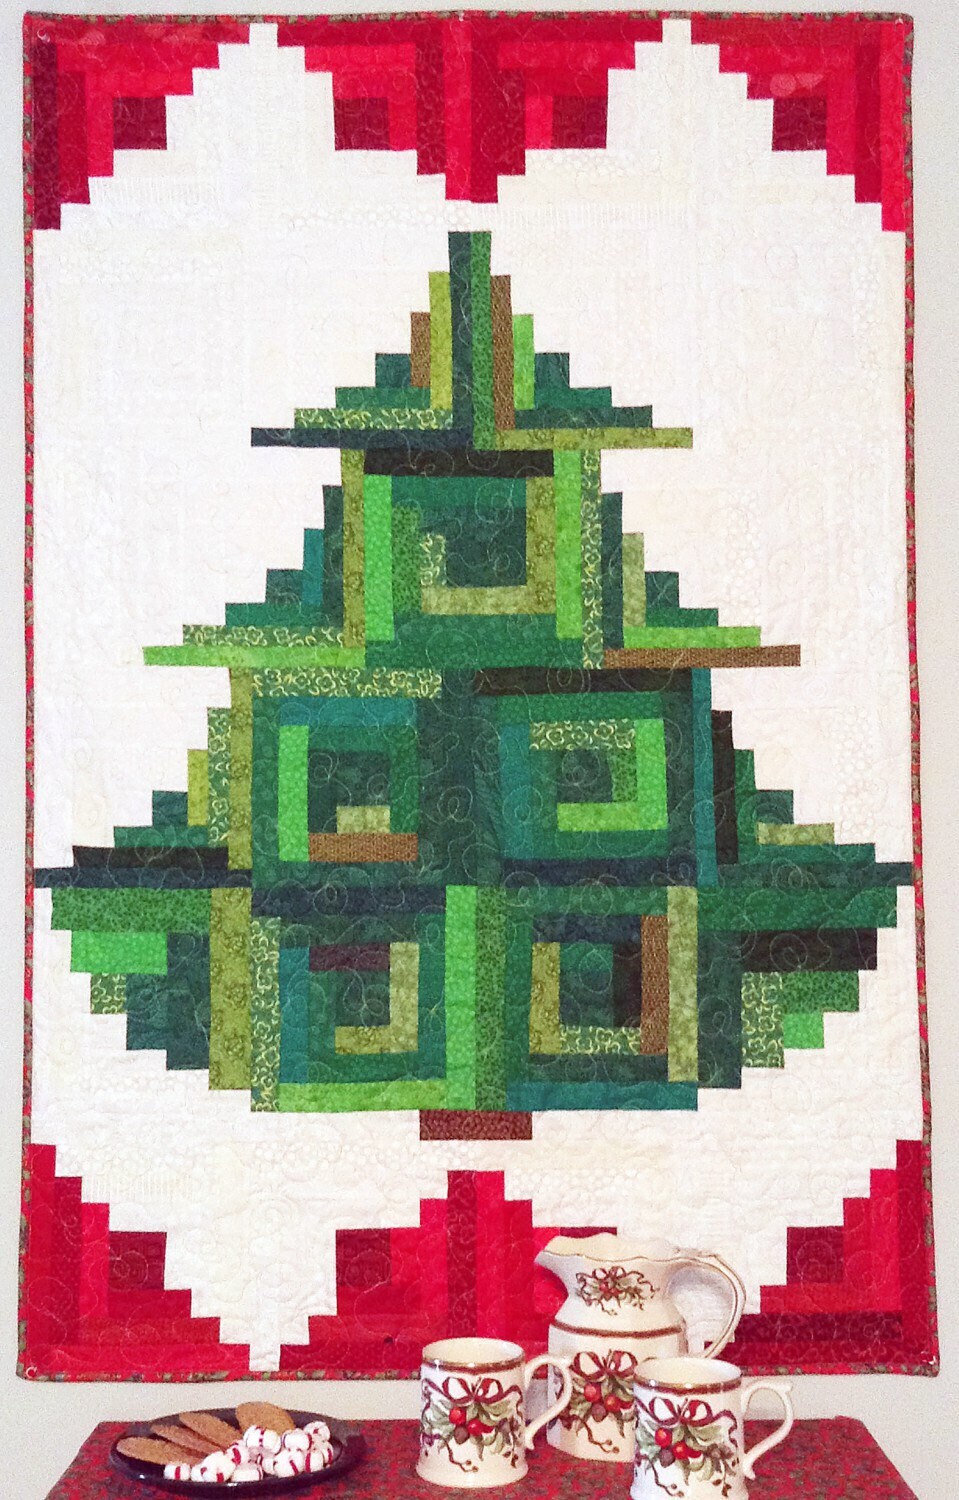 Trim the Tree Quilt Pattern - Cut Loose Press - Jean Ann Wright - Christmas Quilt Pattern - Fat Quarter Friendly